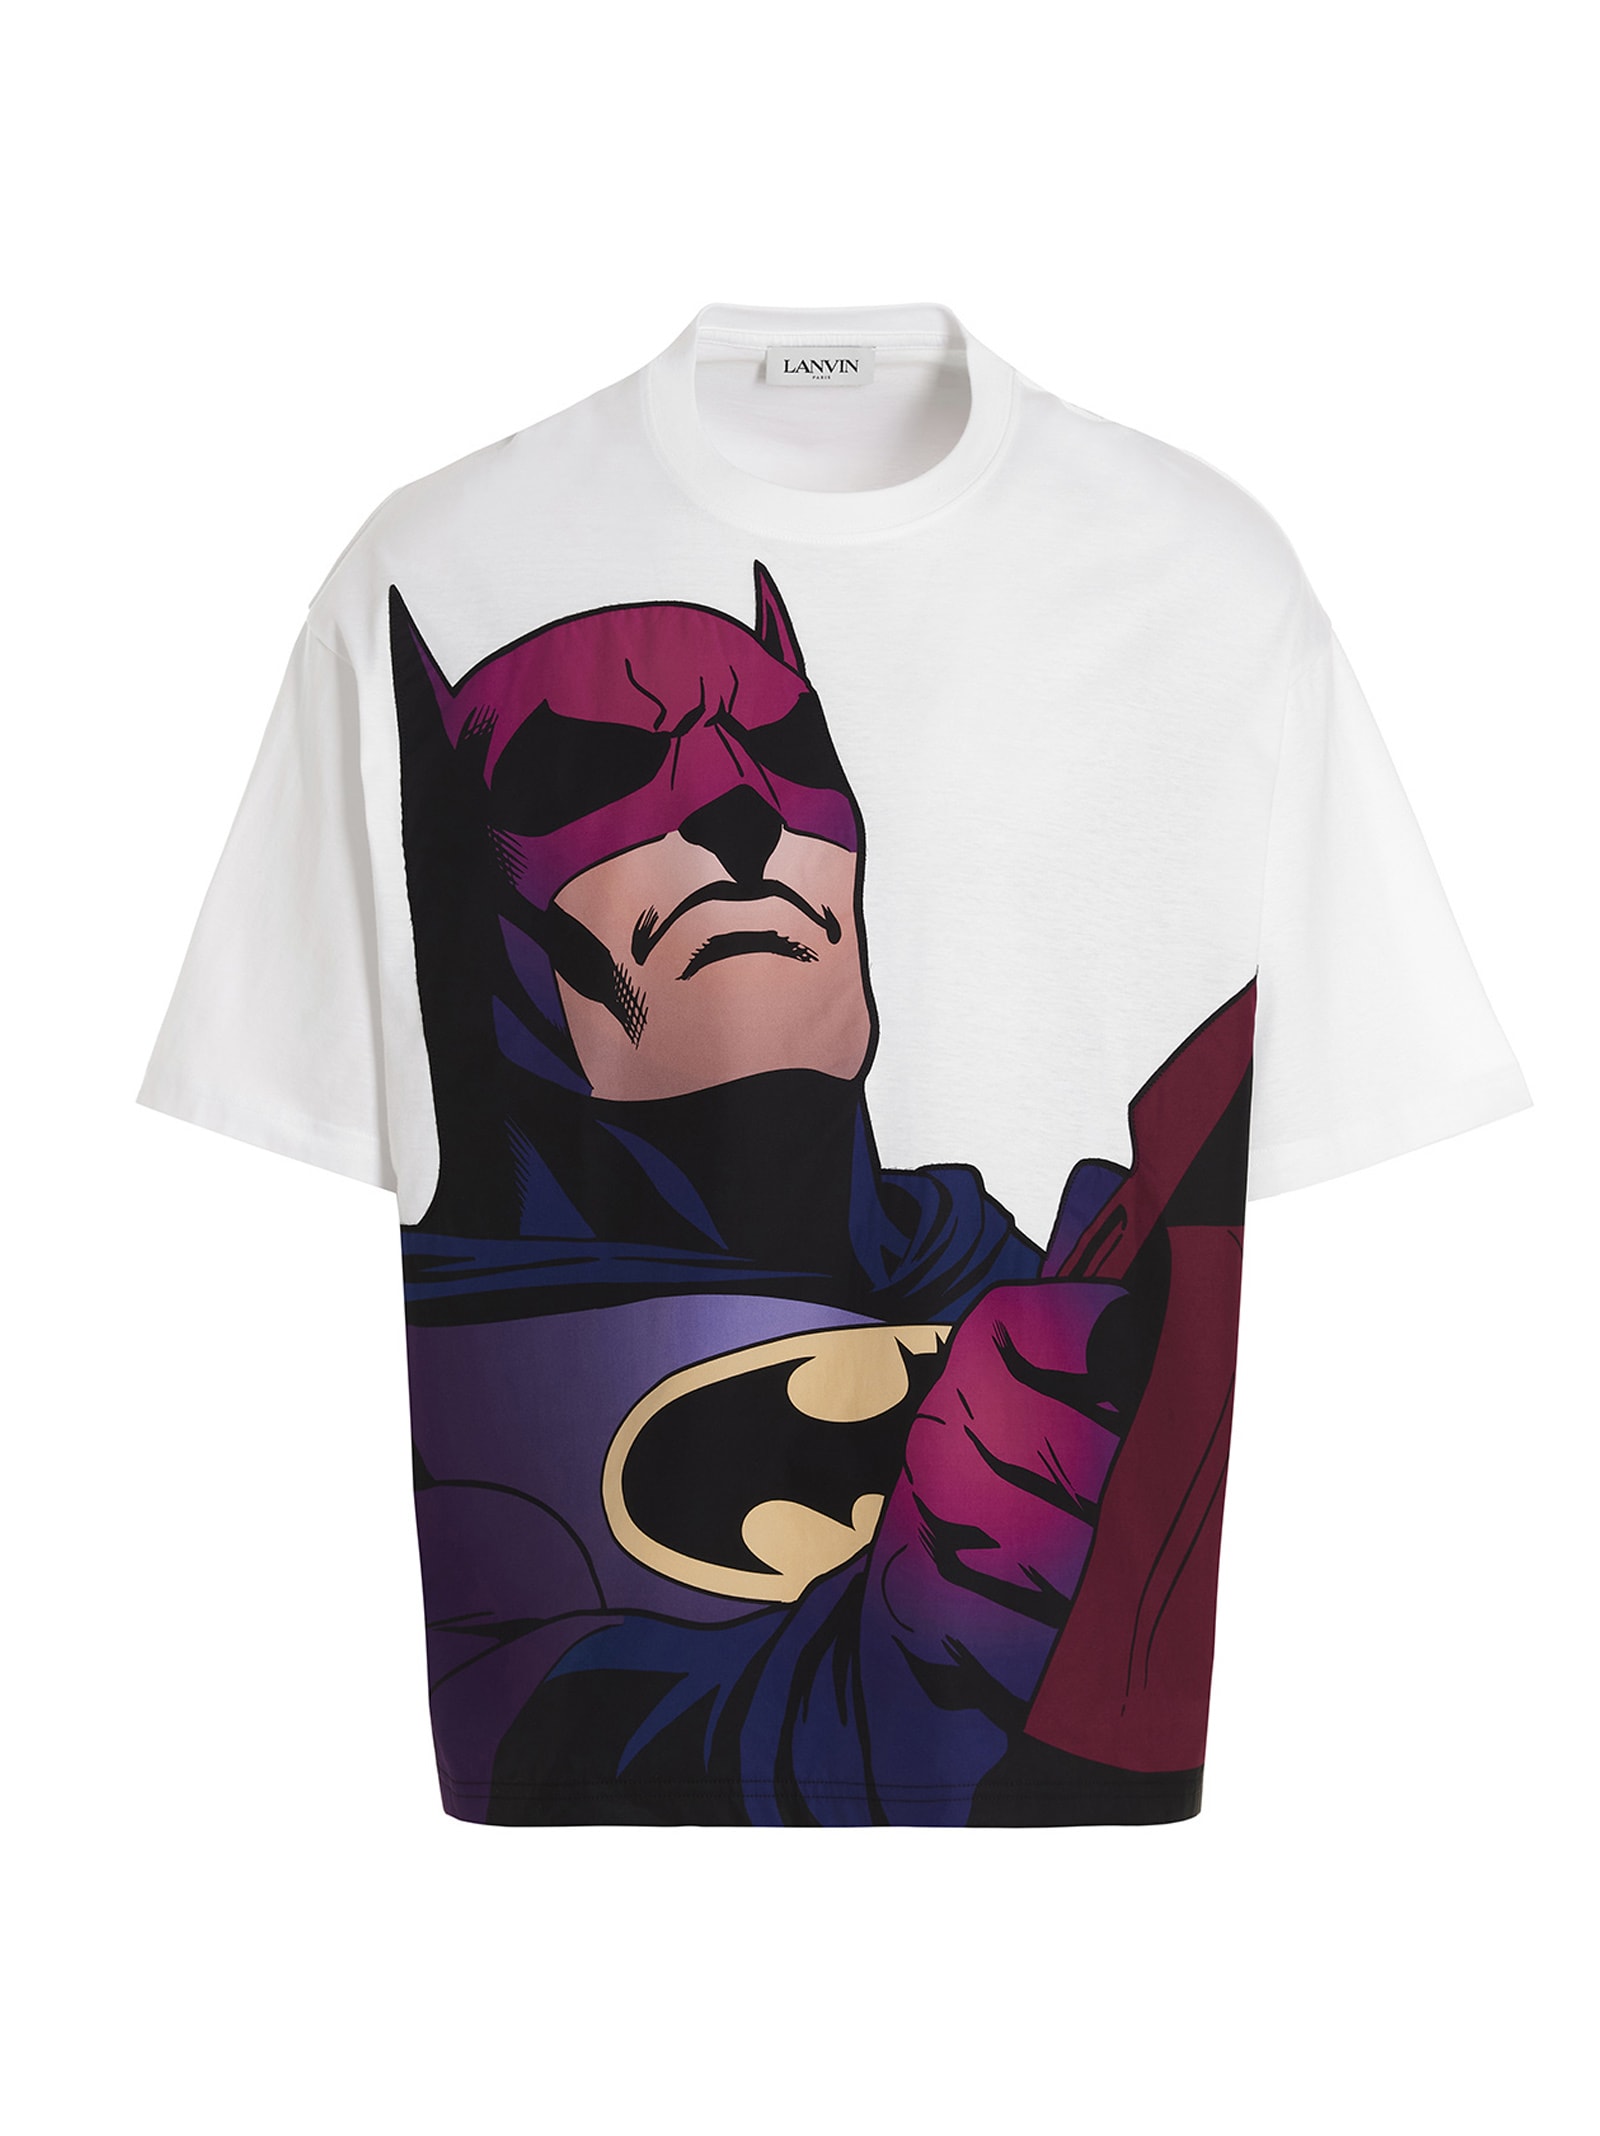 Lanvin batman T-shirt